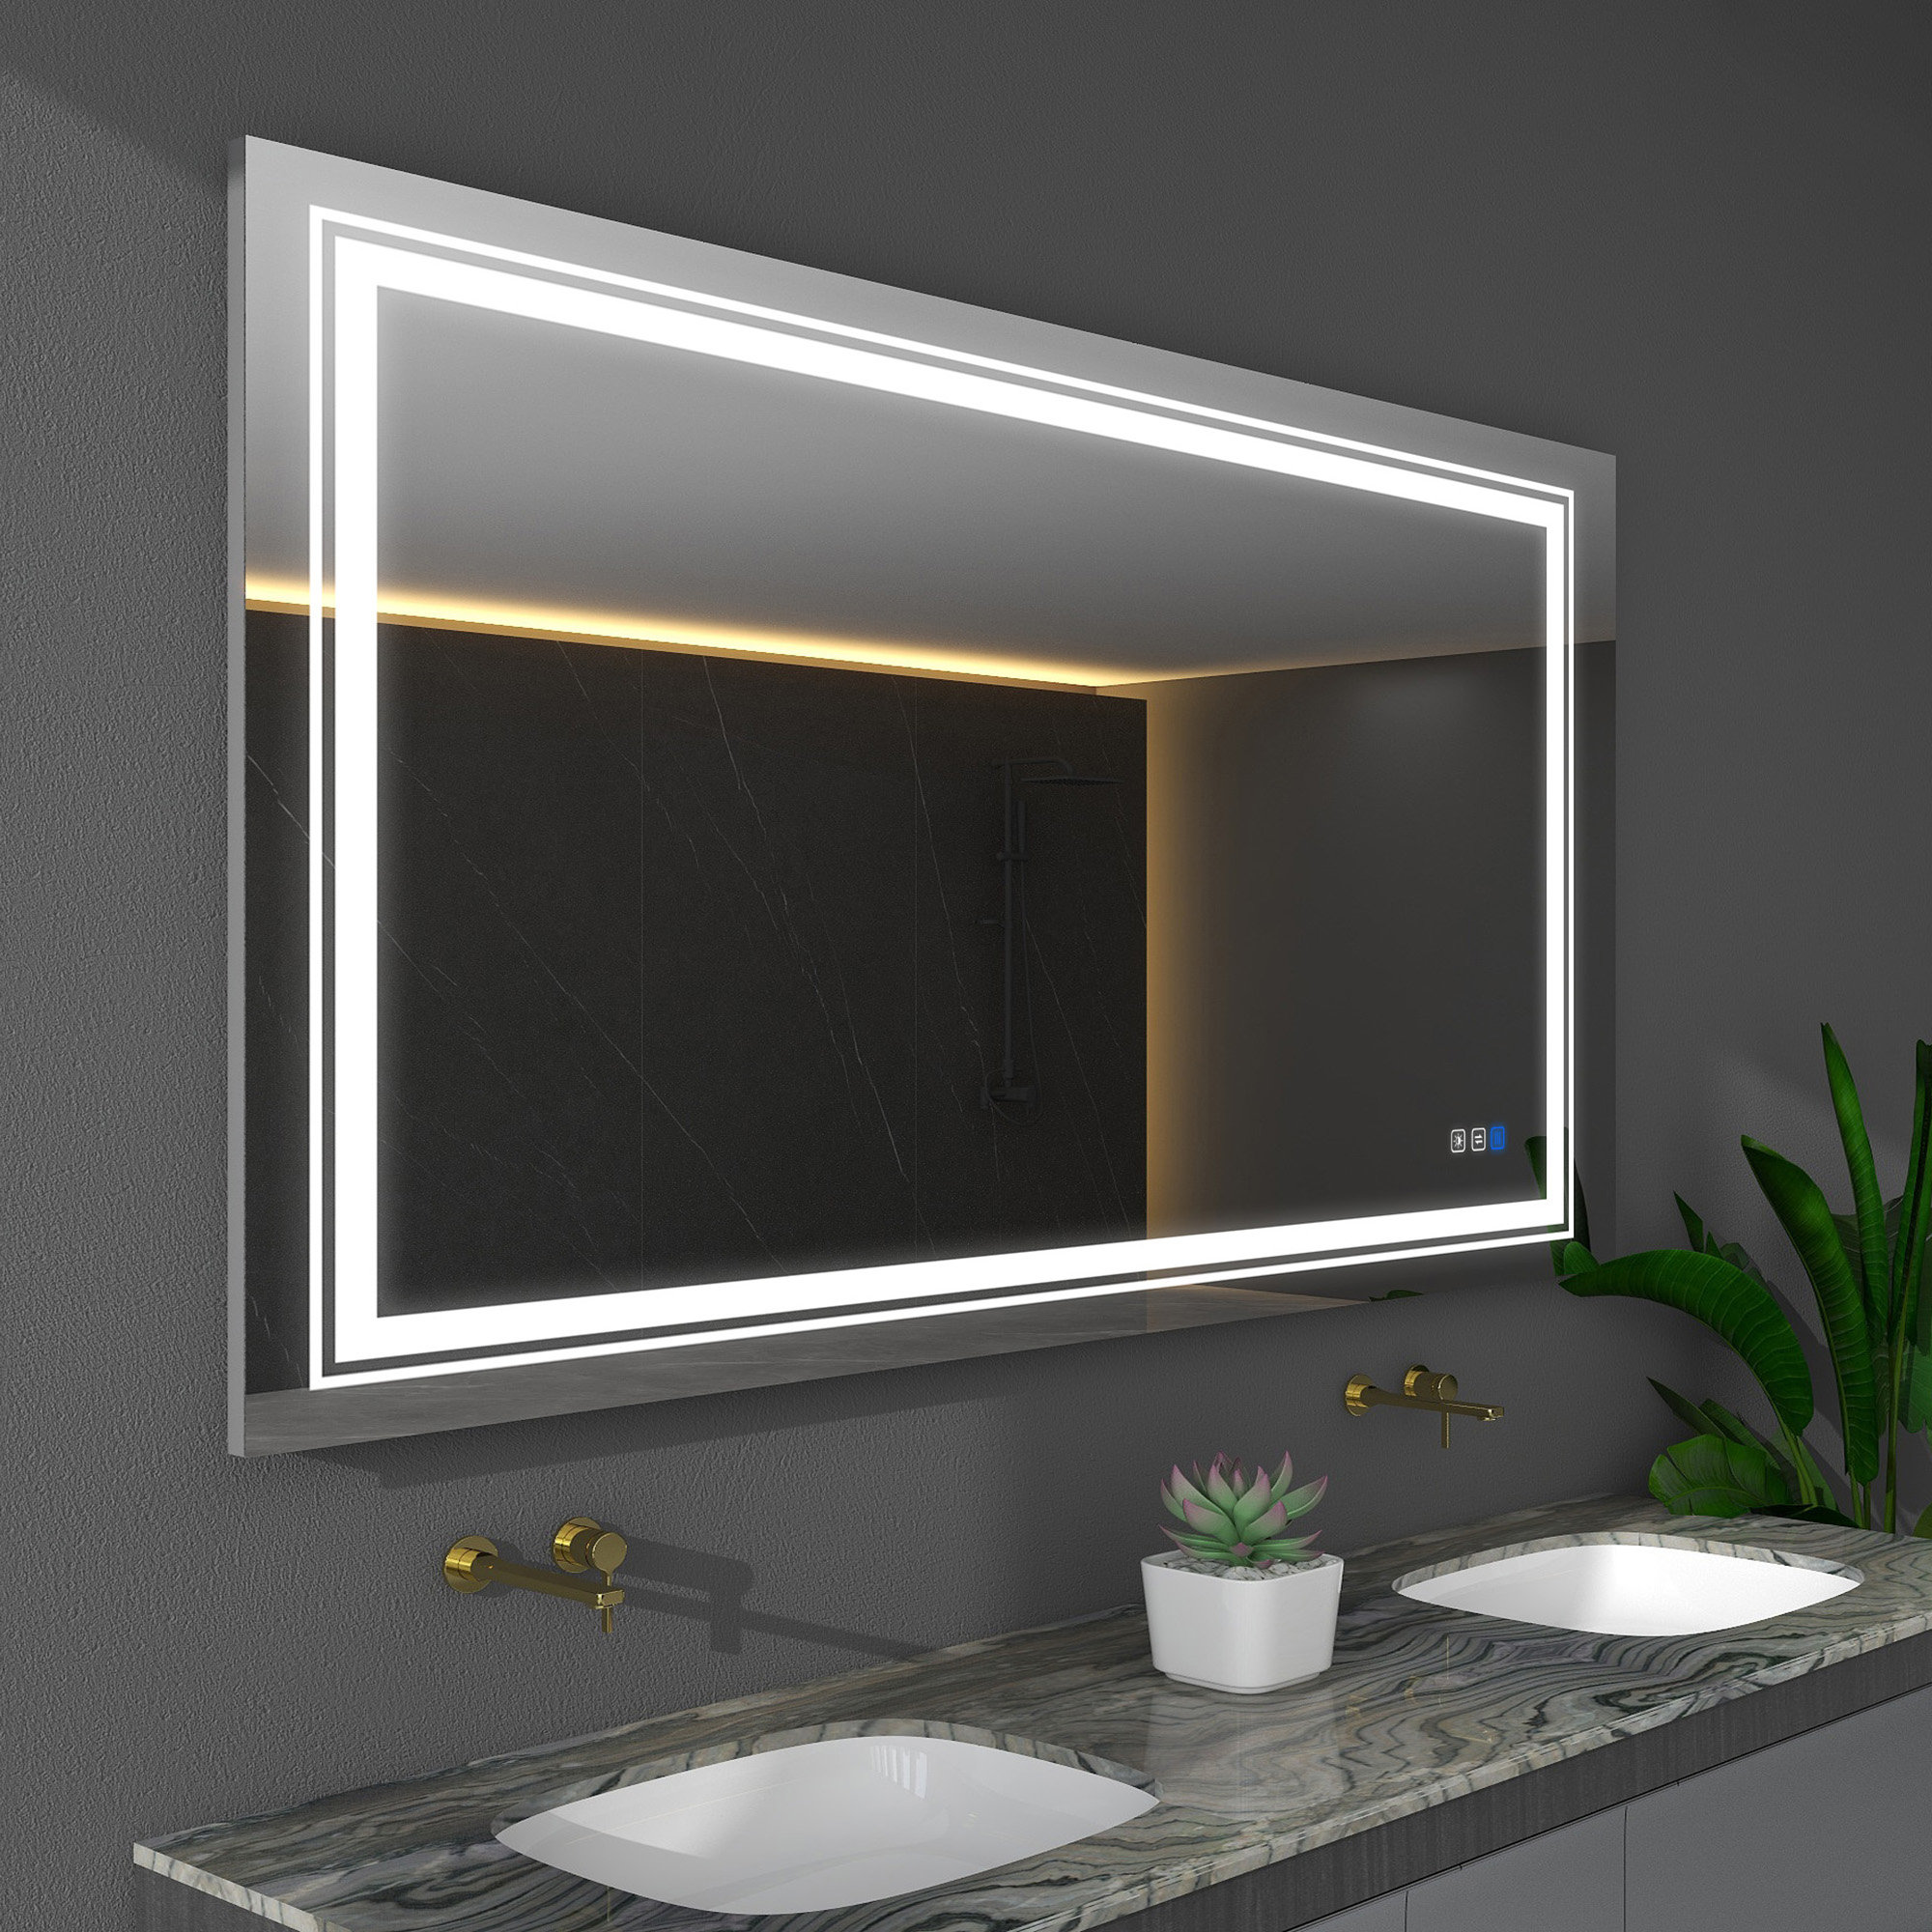 FRALIMK LED Makeup Bathroom Mirror with 3 Light Color, Anti-Fog